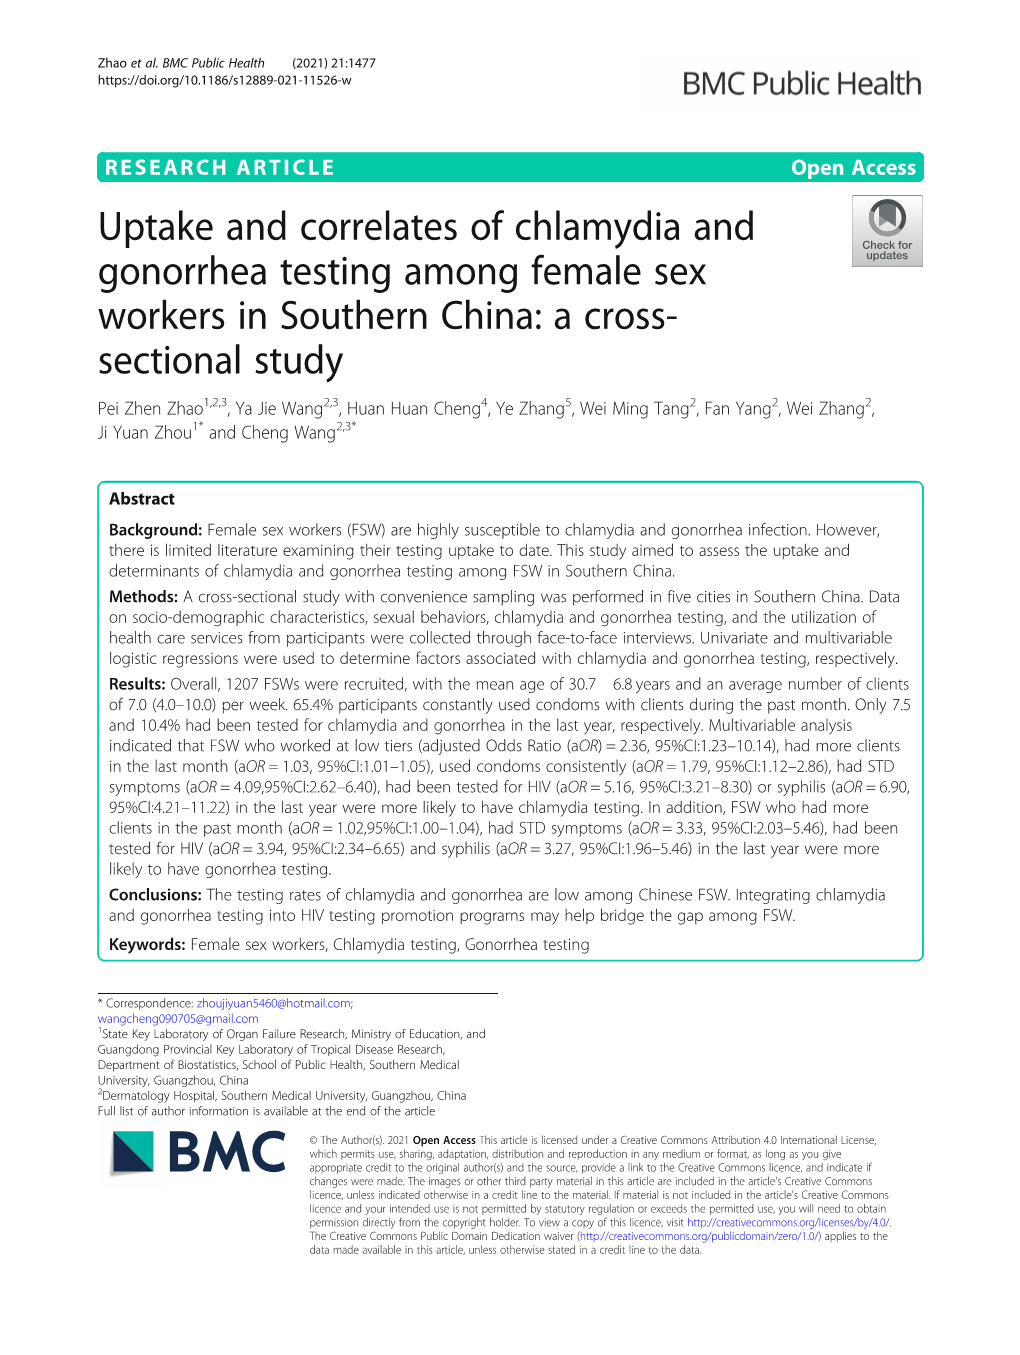 Uptake and Correlates of Chlamydia and Gonorrhea